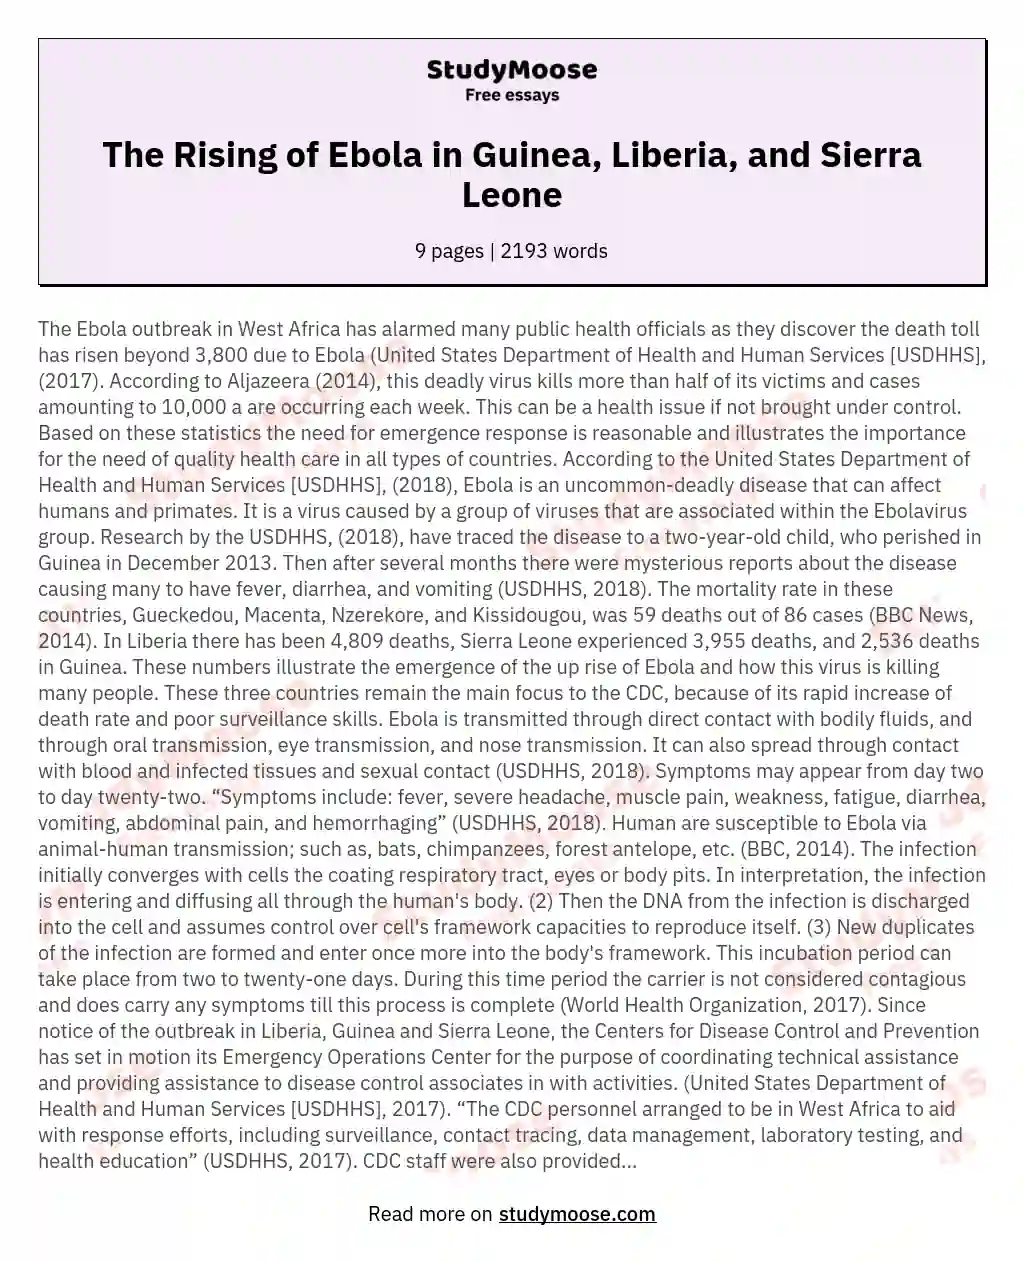 The Rising of Ebola in Guinea, Liberia, and Sierra Leone